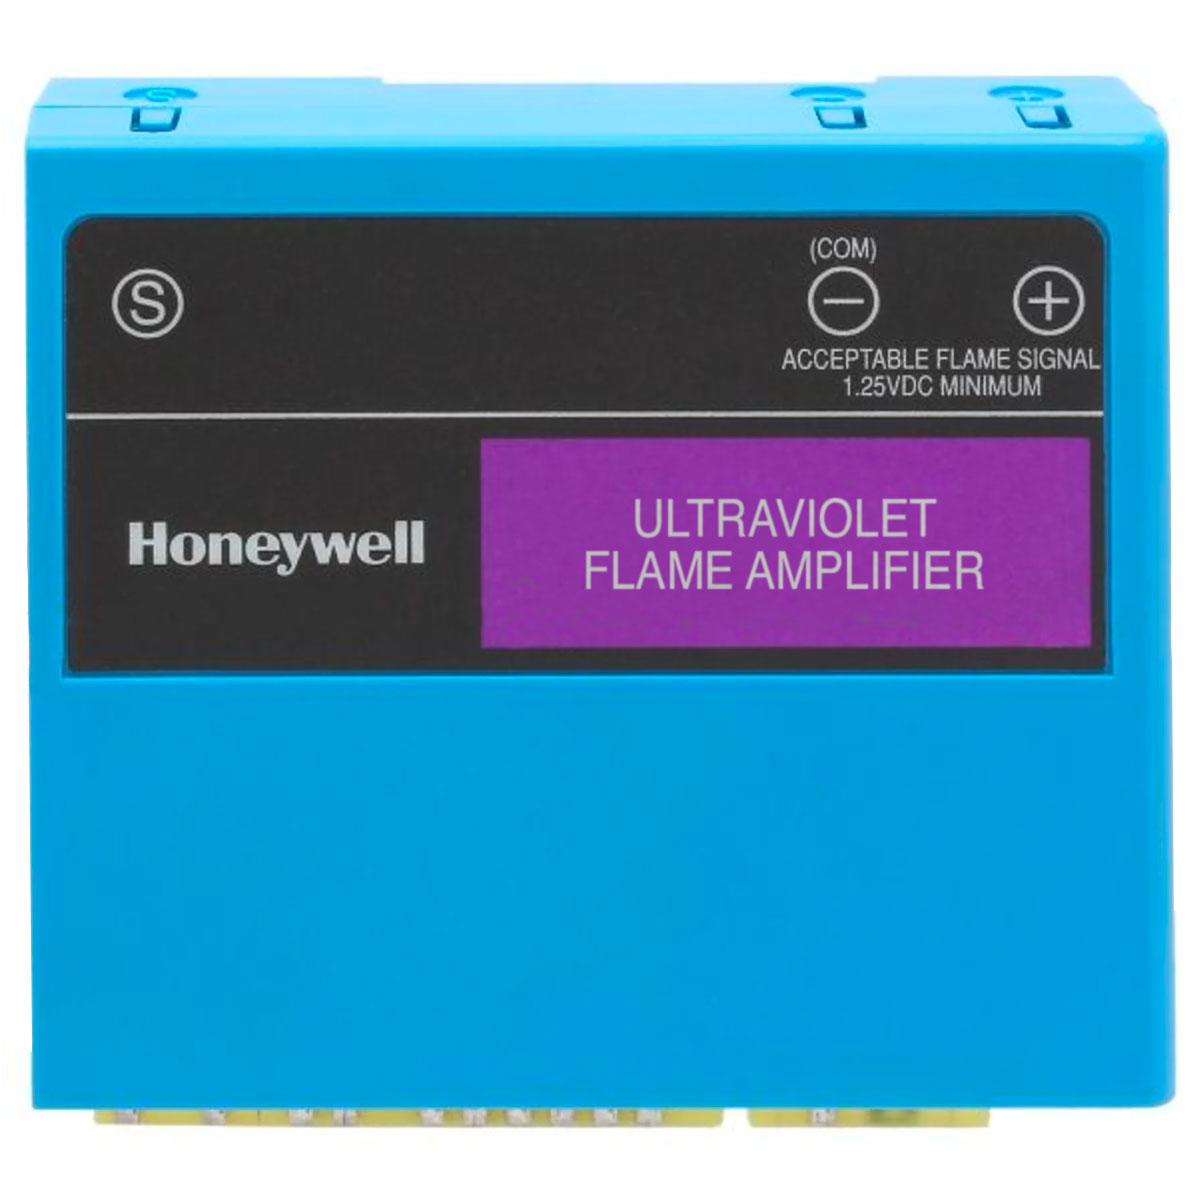 Flame Amplifier, UV, FFRT: 2,3sec